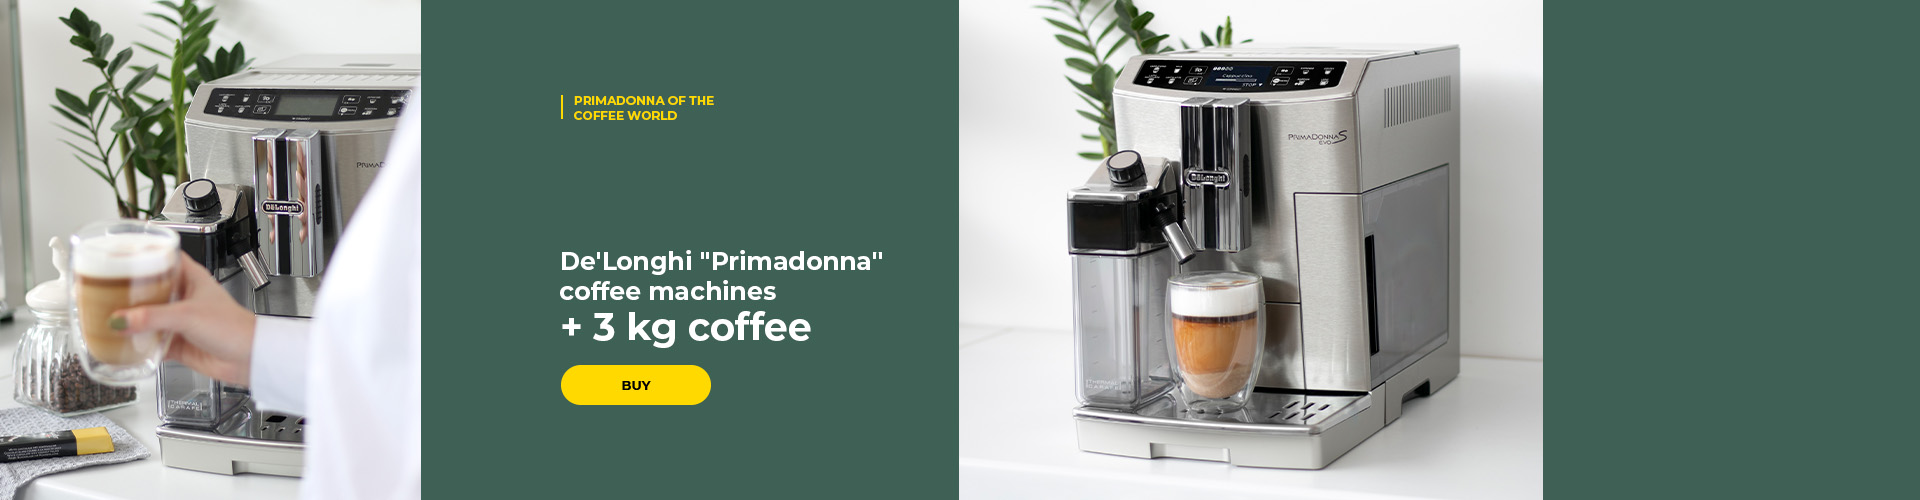 De'Longhi "Primadonna" coffee machines +3 kg coffee